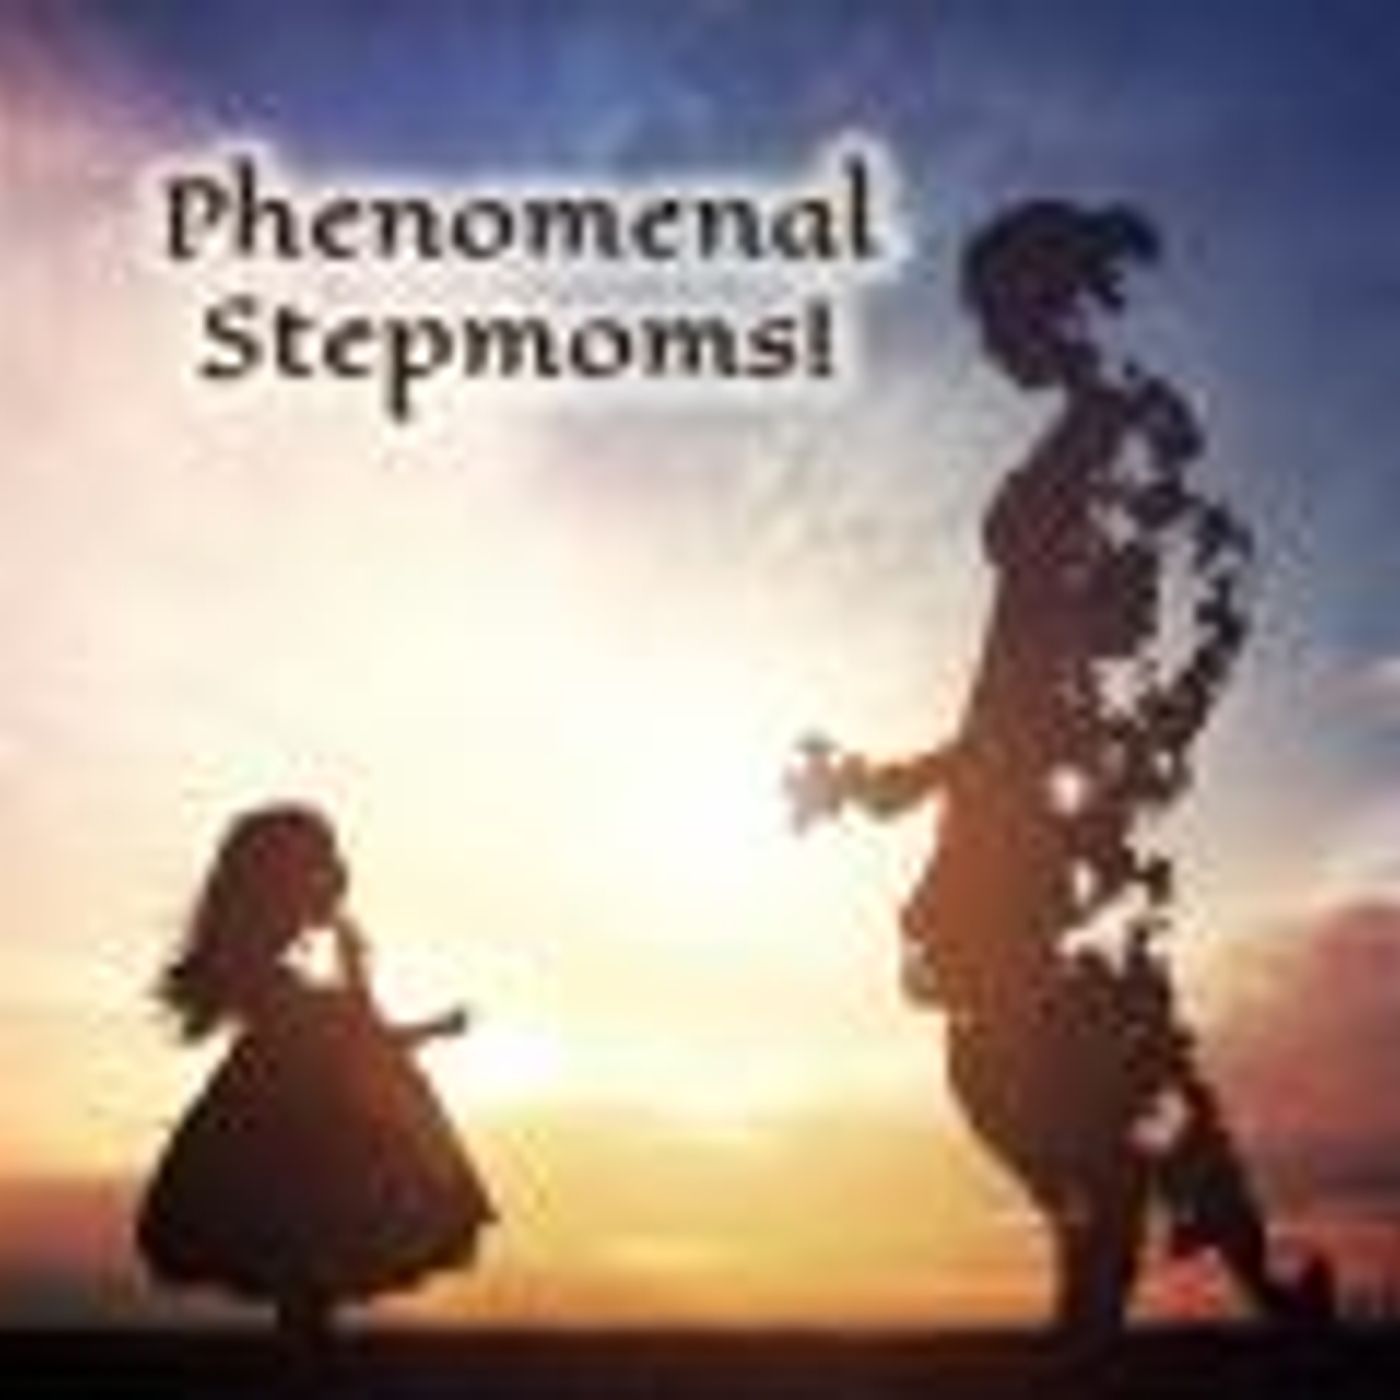 Phenomenal Stepmoms! Beyond the Stereotype!